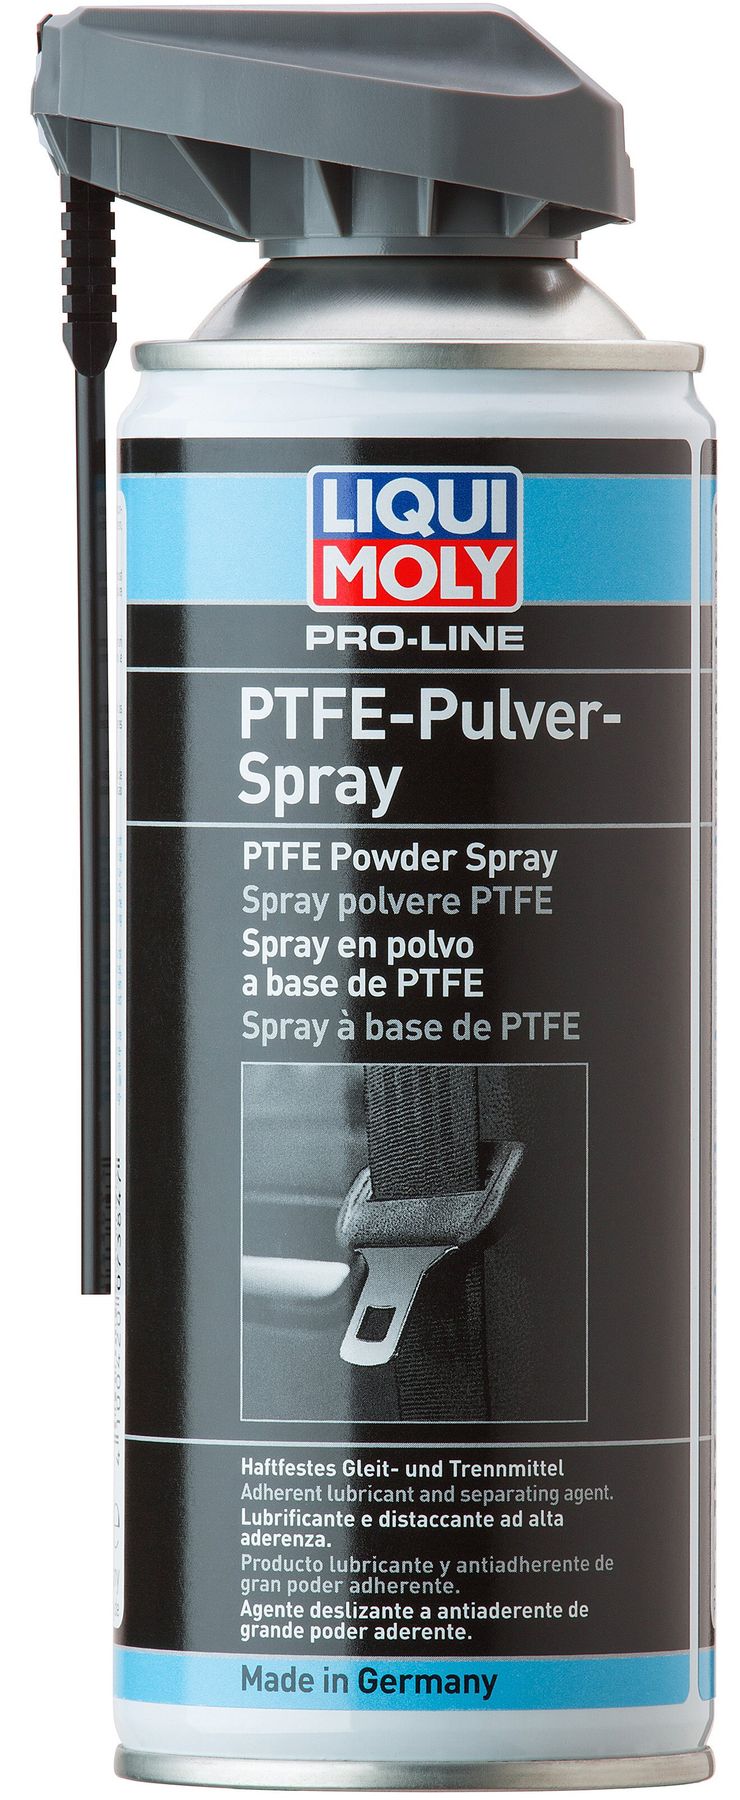 Liqui Moly Pro-Line PTFE-Pulver-Spray - тефлоновый спрей, 0.4л - LIQUI .